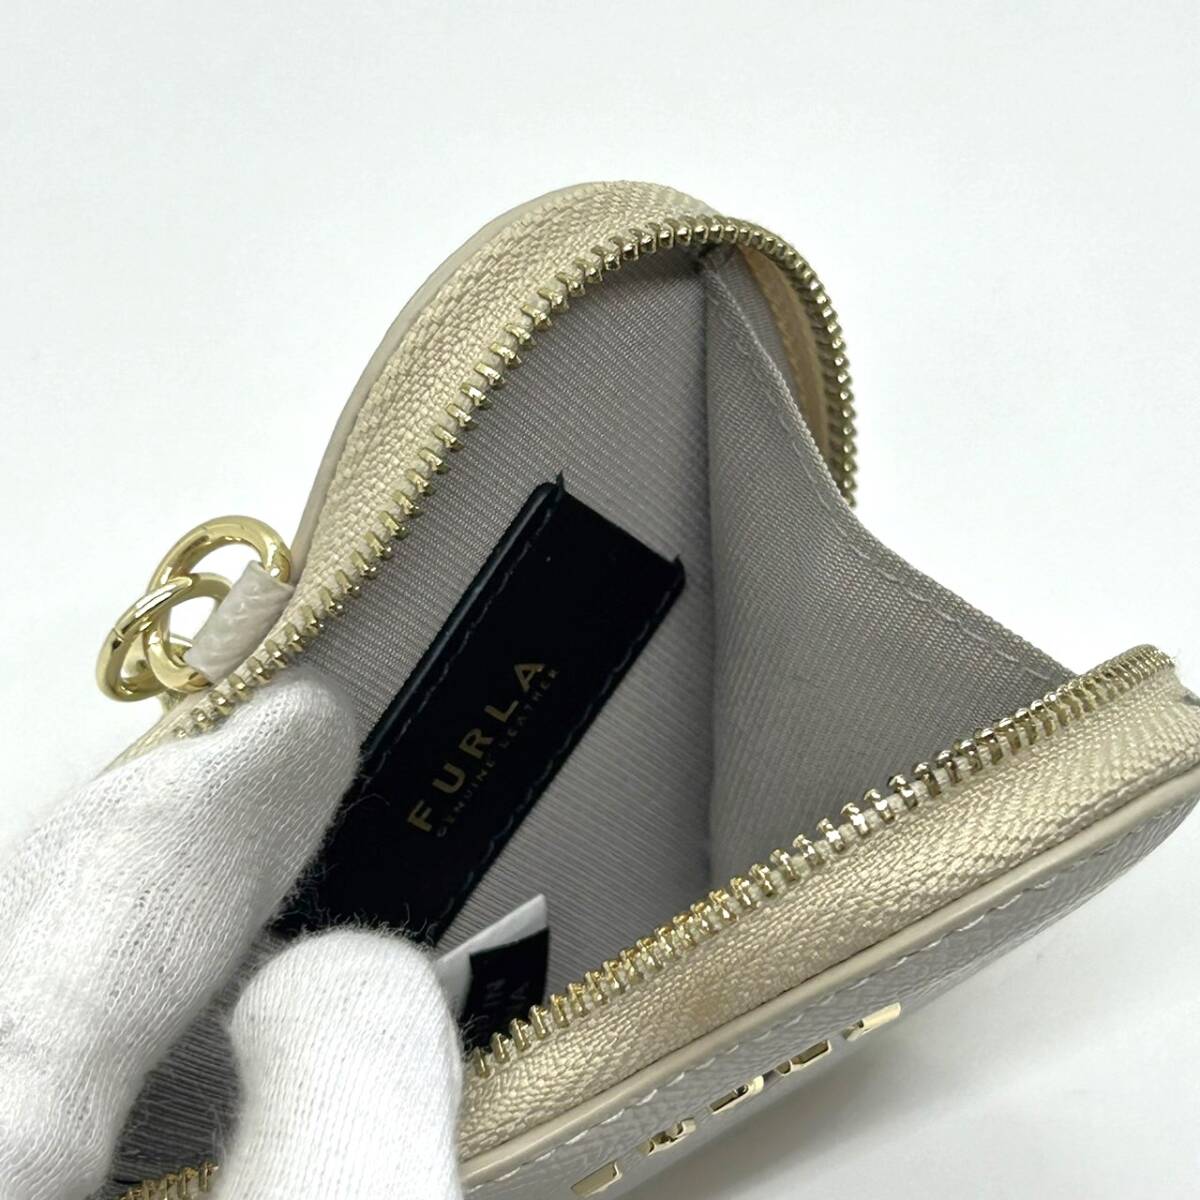 11495*FURULA Furla coin case purse Heart gray gray ju key chain change purse . box equipped Gold metal fittings Mini purse key holder 